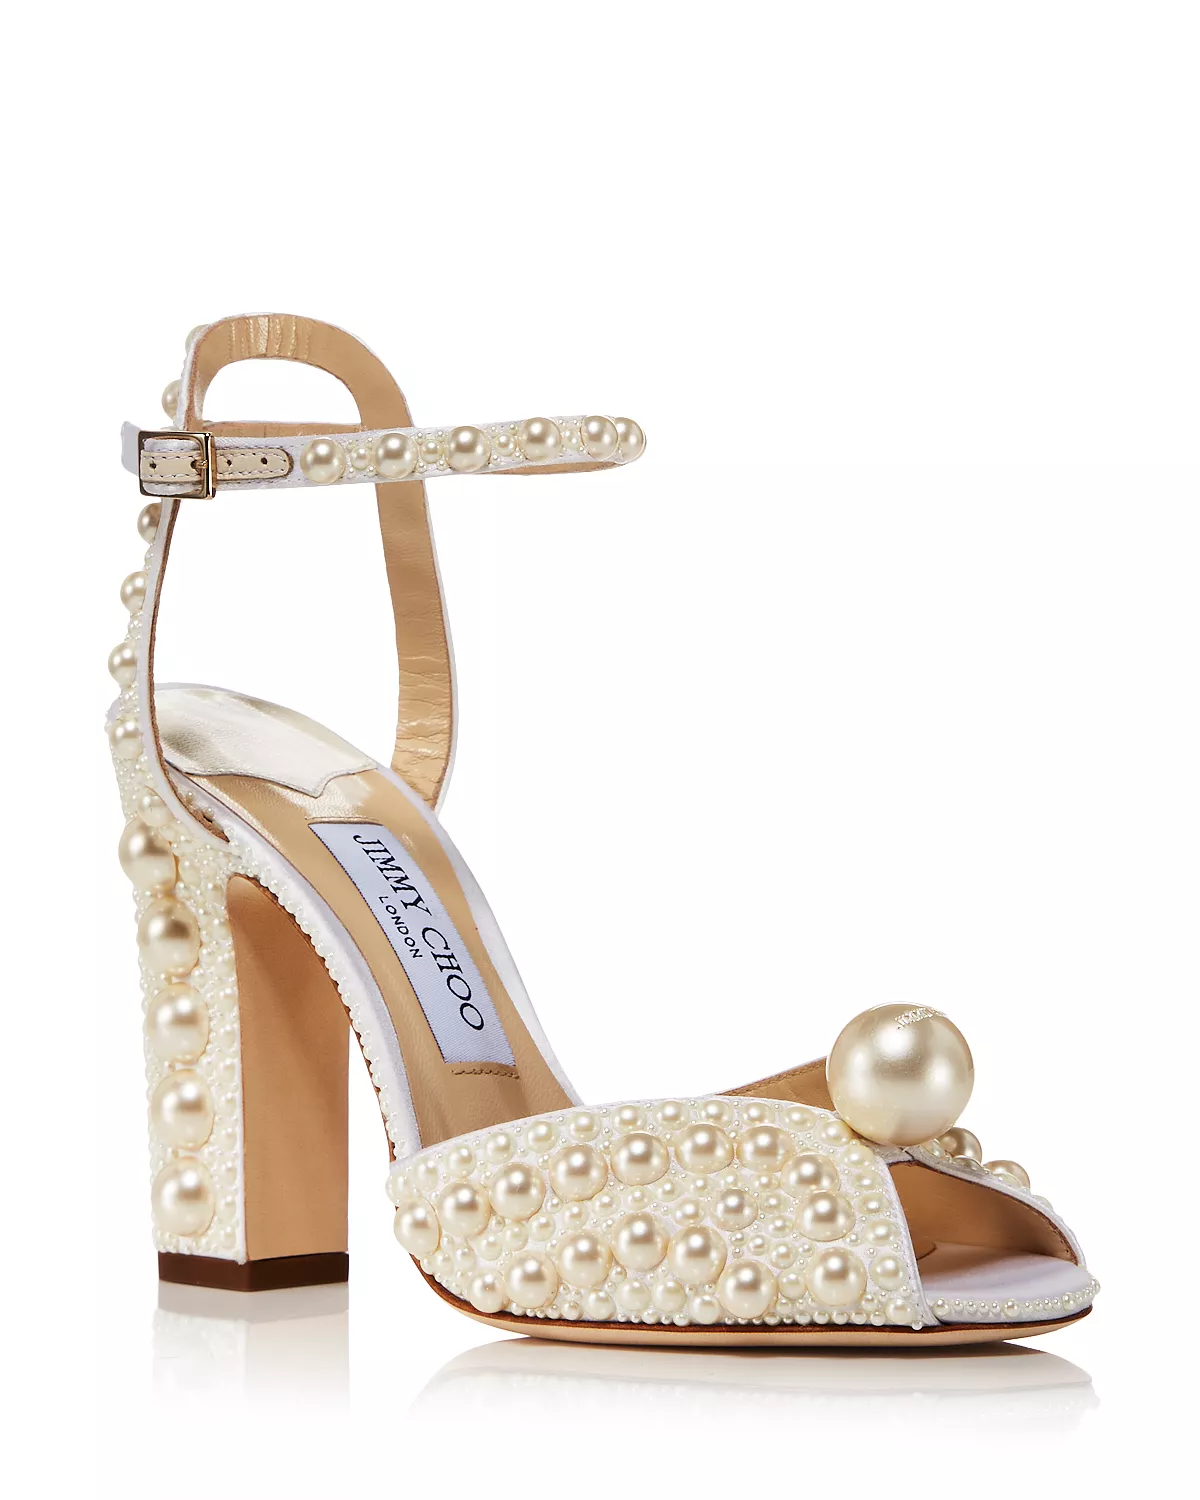 All Pearl Wedding Sandals with Block Heel